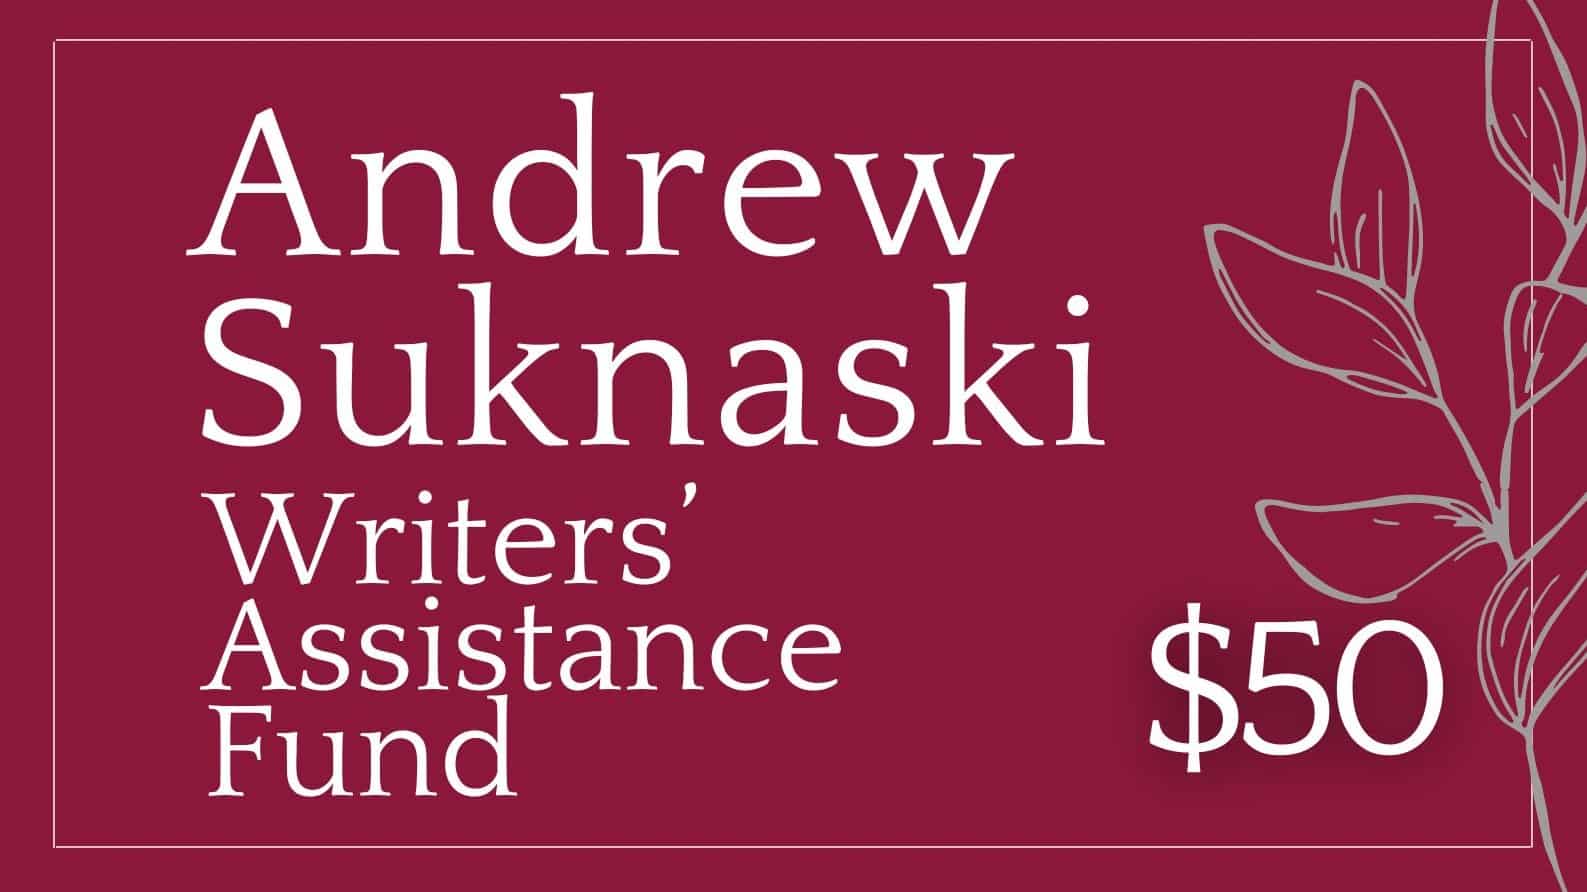 Andrew Suknaski Writers’ Assistance  Fund supporting image.